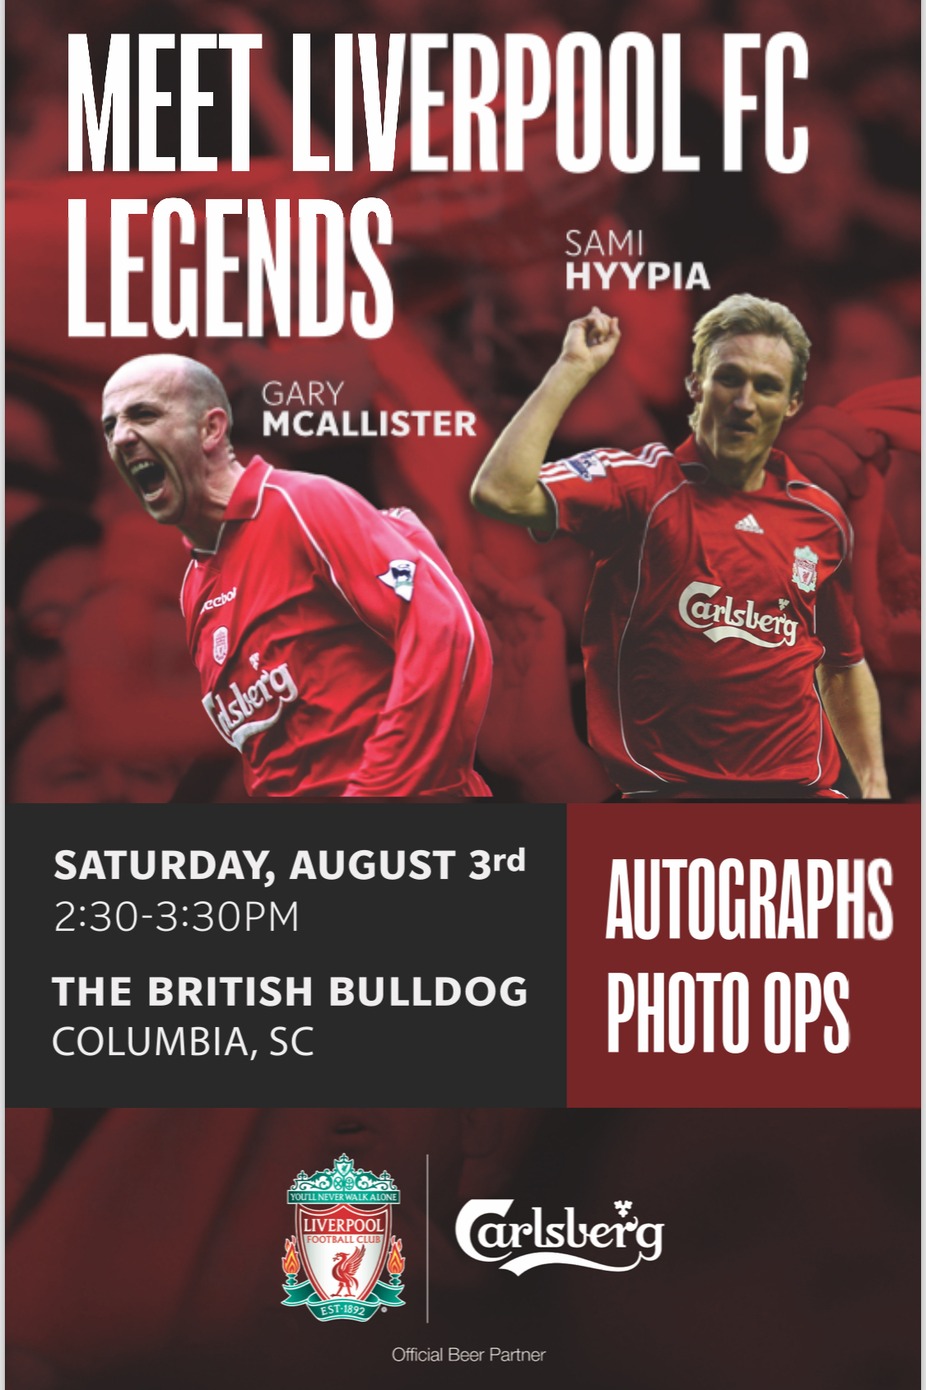 ;Liverpool Legends event photo